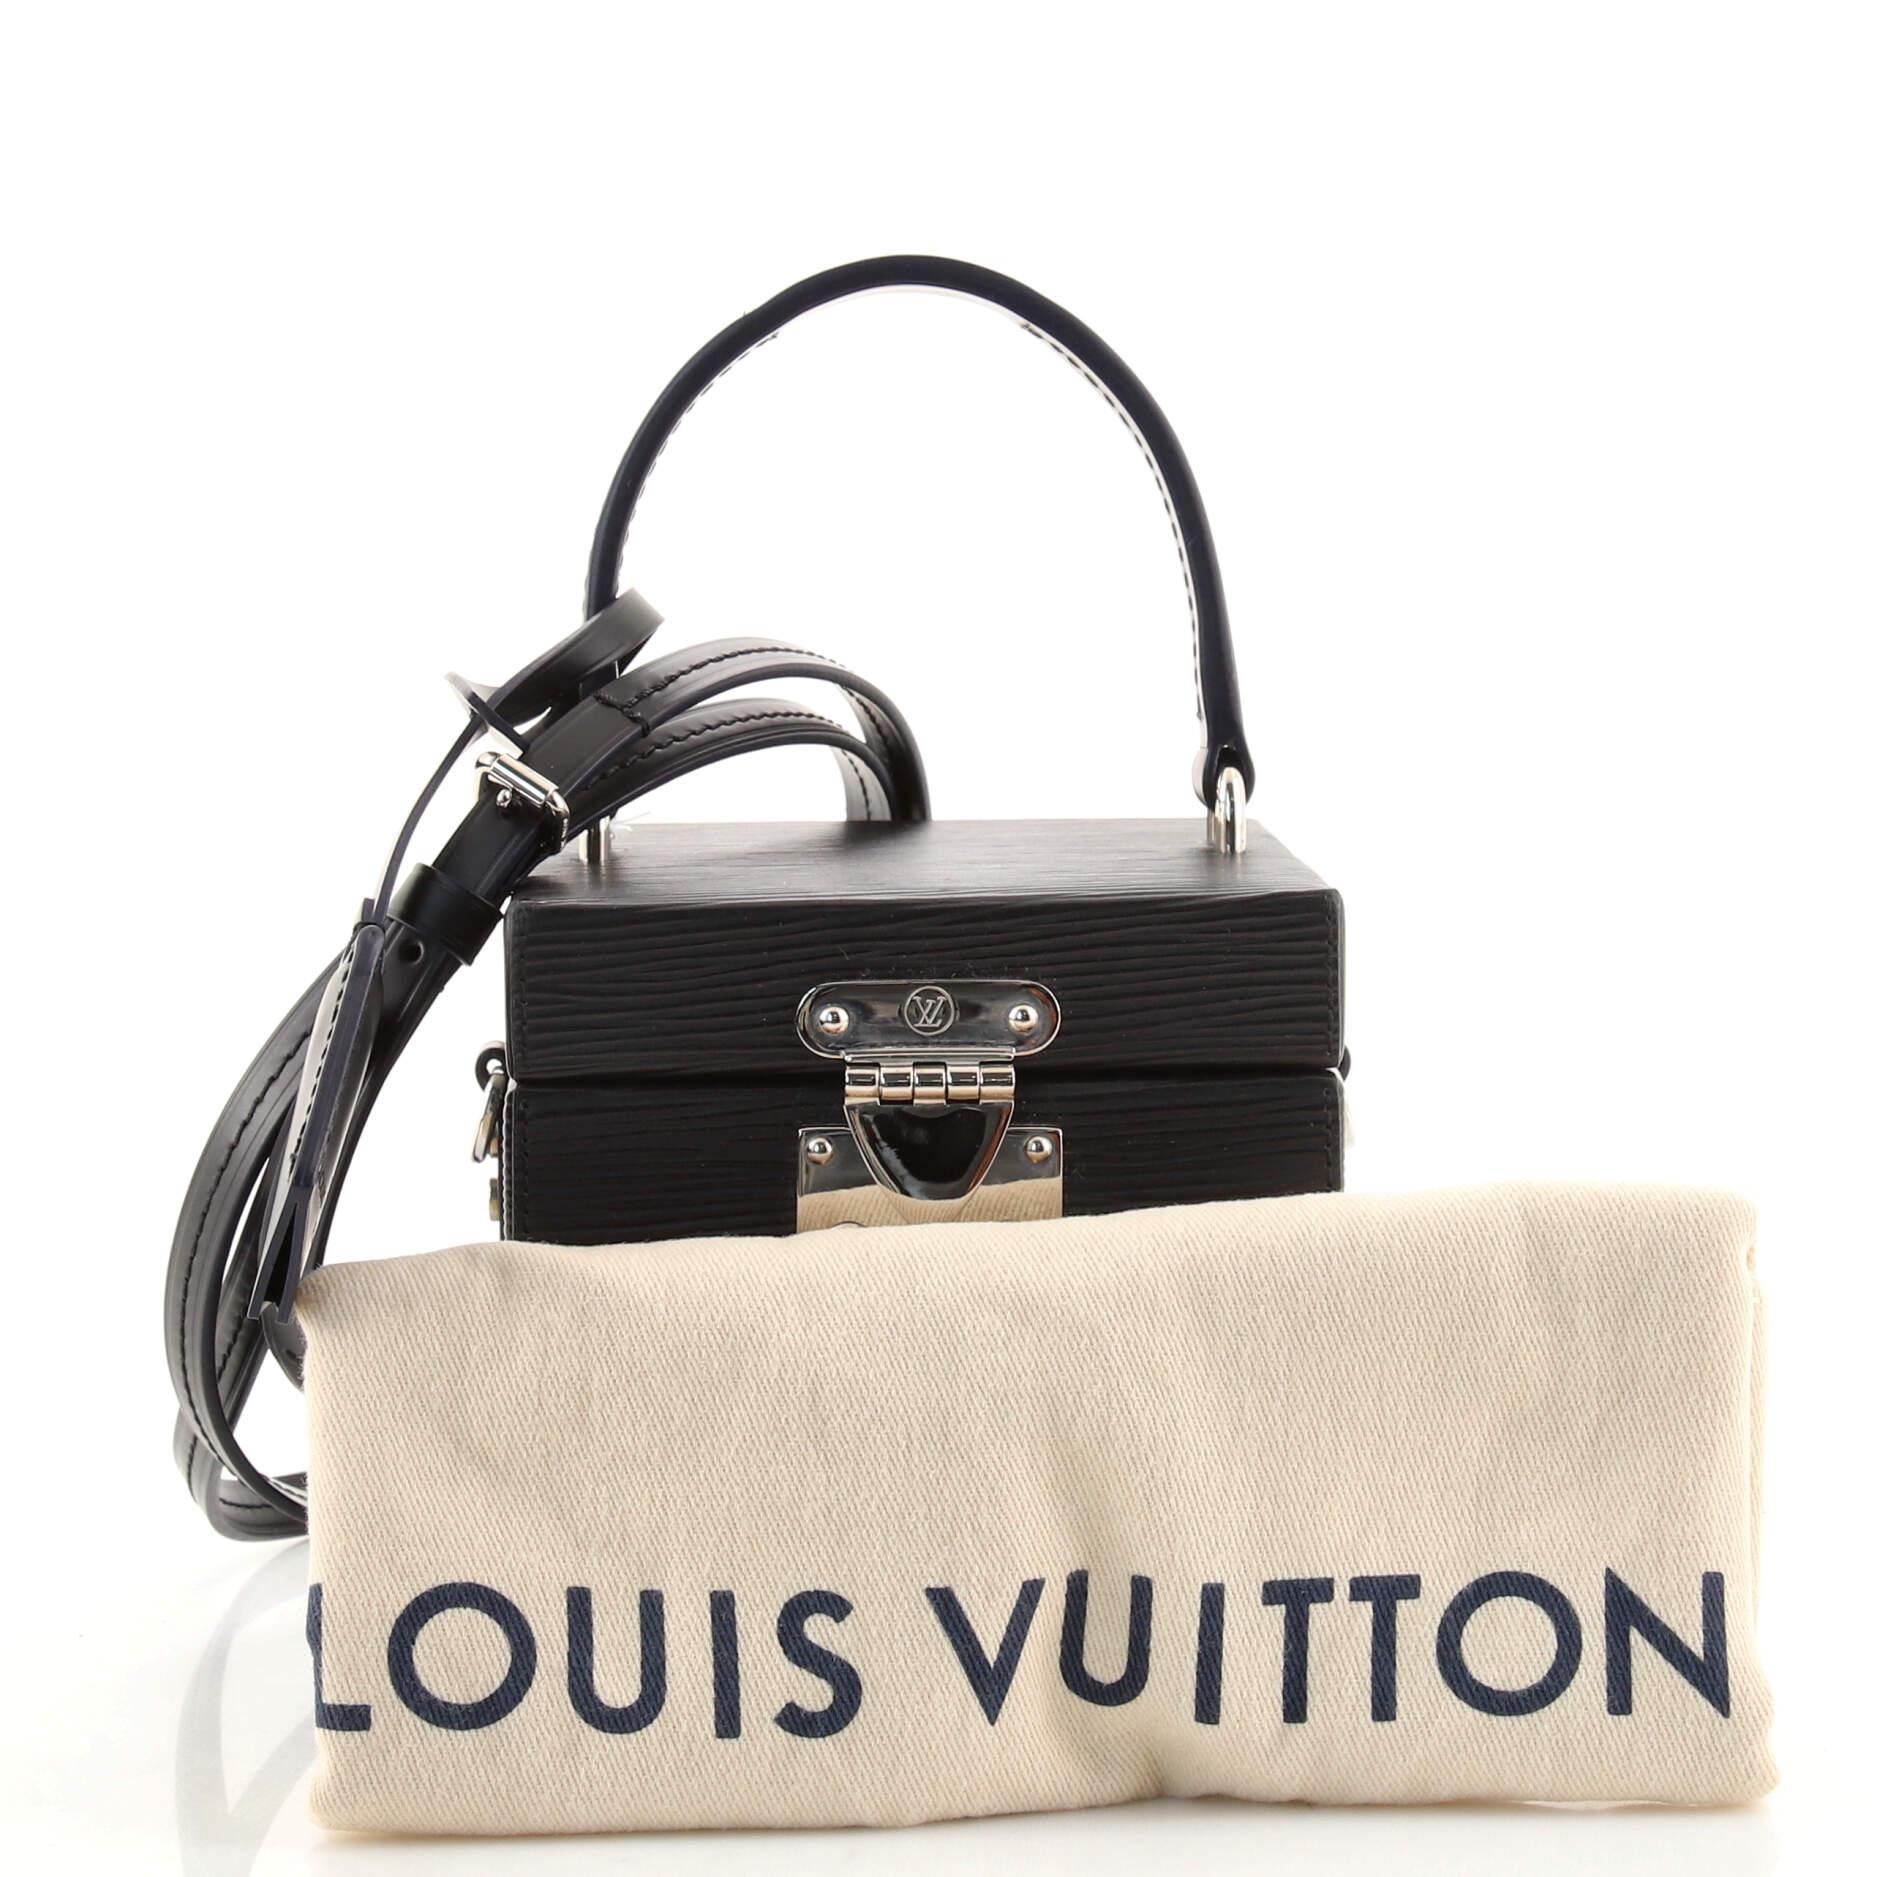 Louis Vuitton Bleecker Box - For Sale on 1stDibs